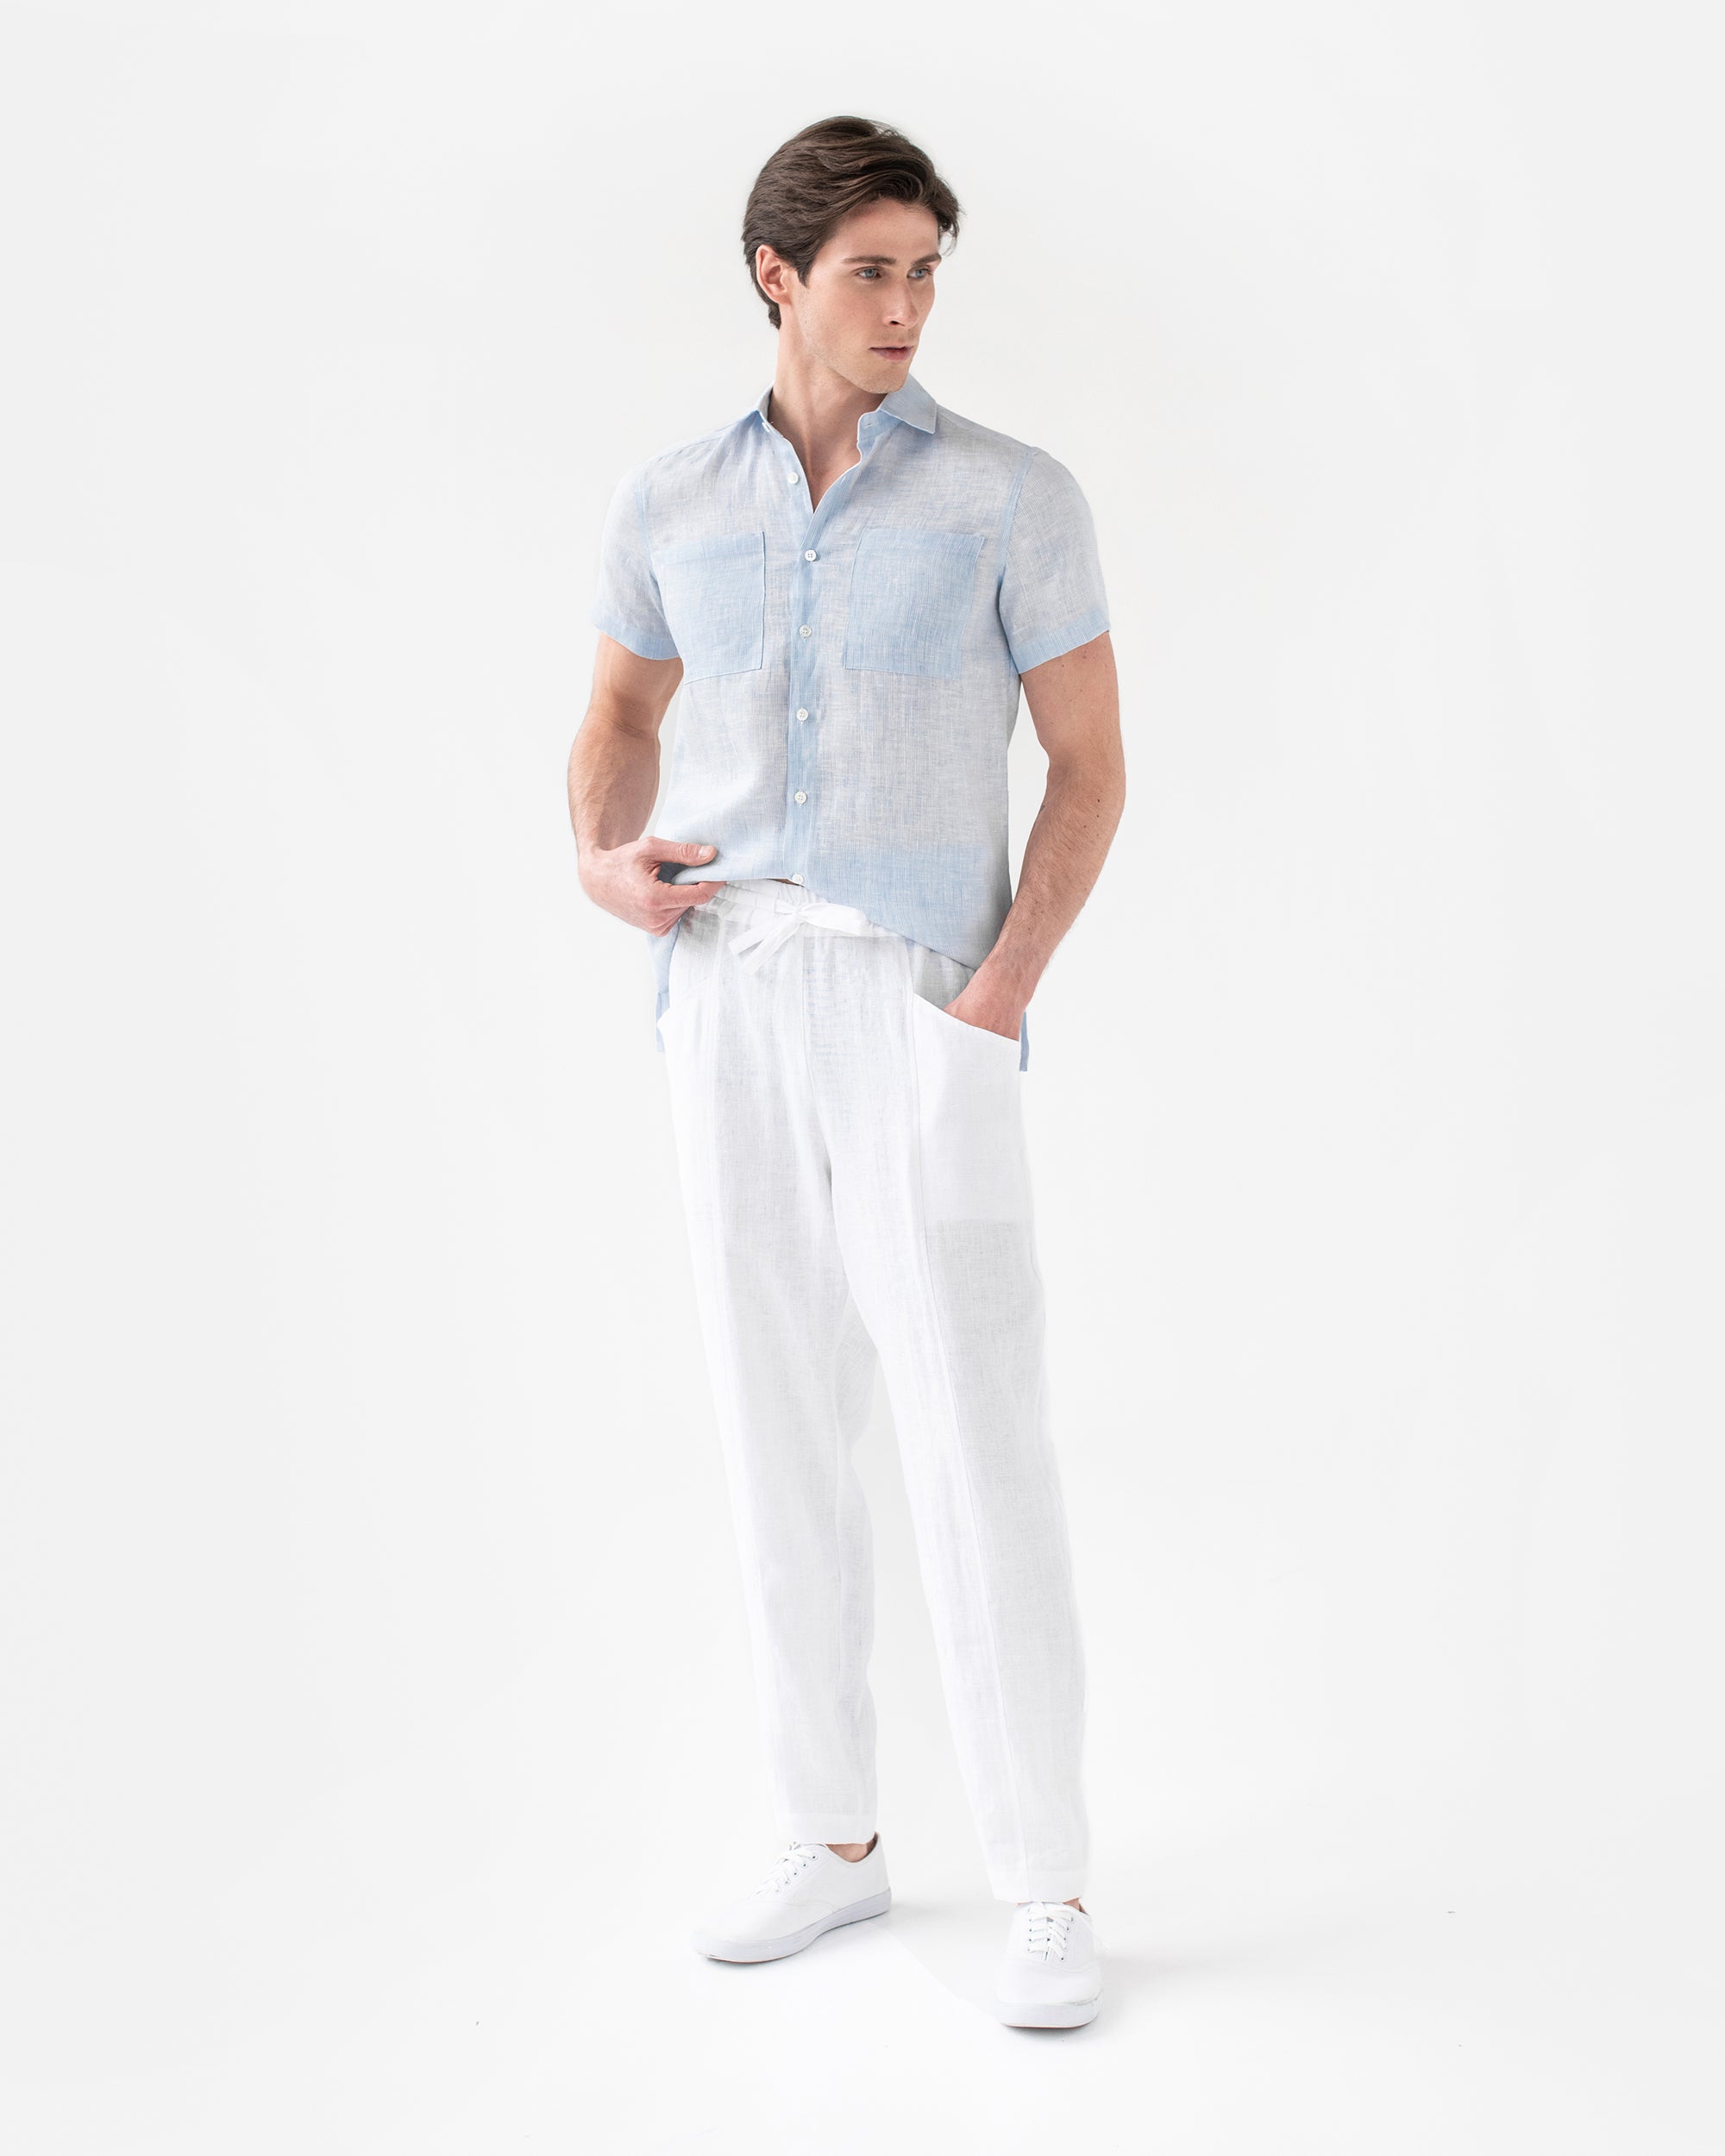 Grey Jackets | White pants men, How to wear white jeans, Fashion pants